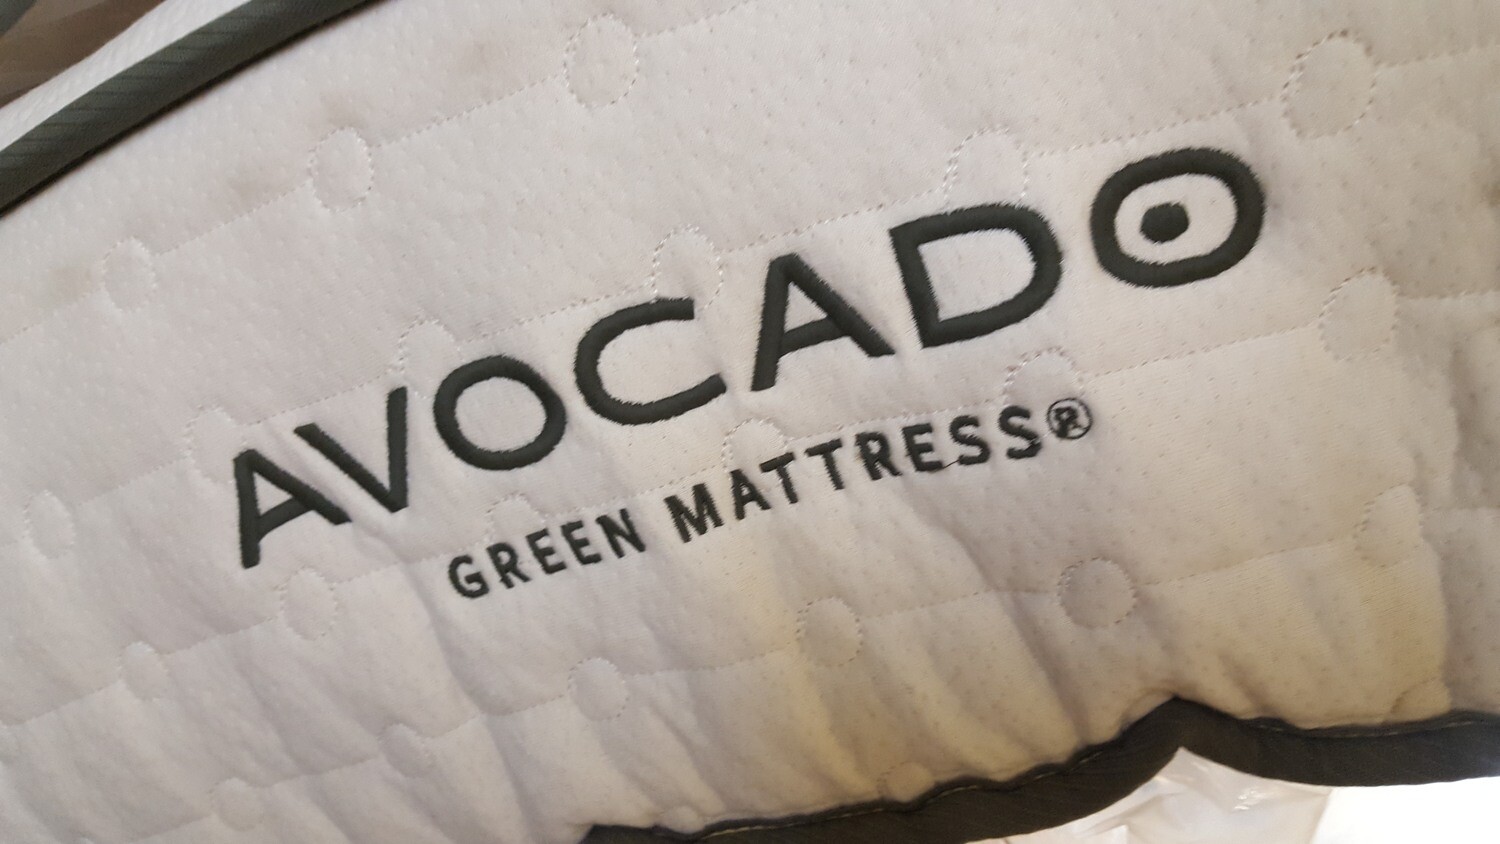 Avocado TWIN XL trial mattress (TX0100) #2120-2212